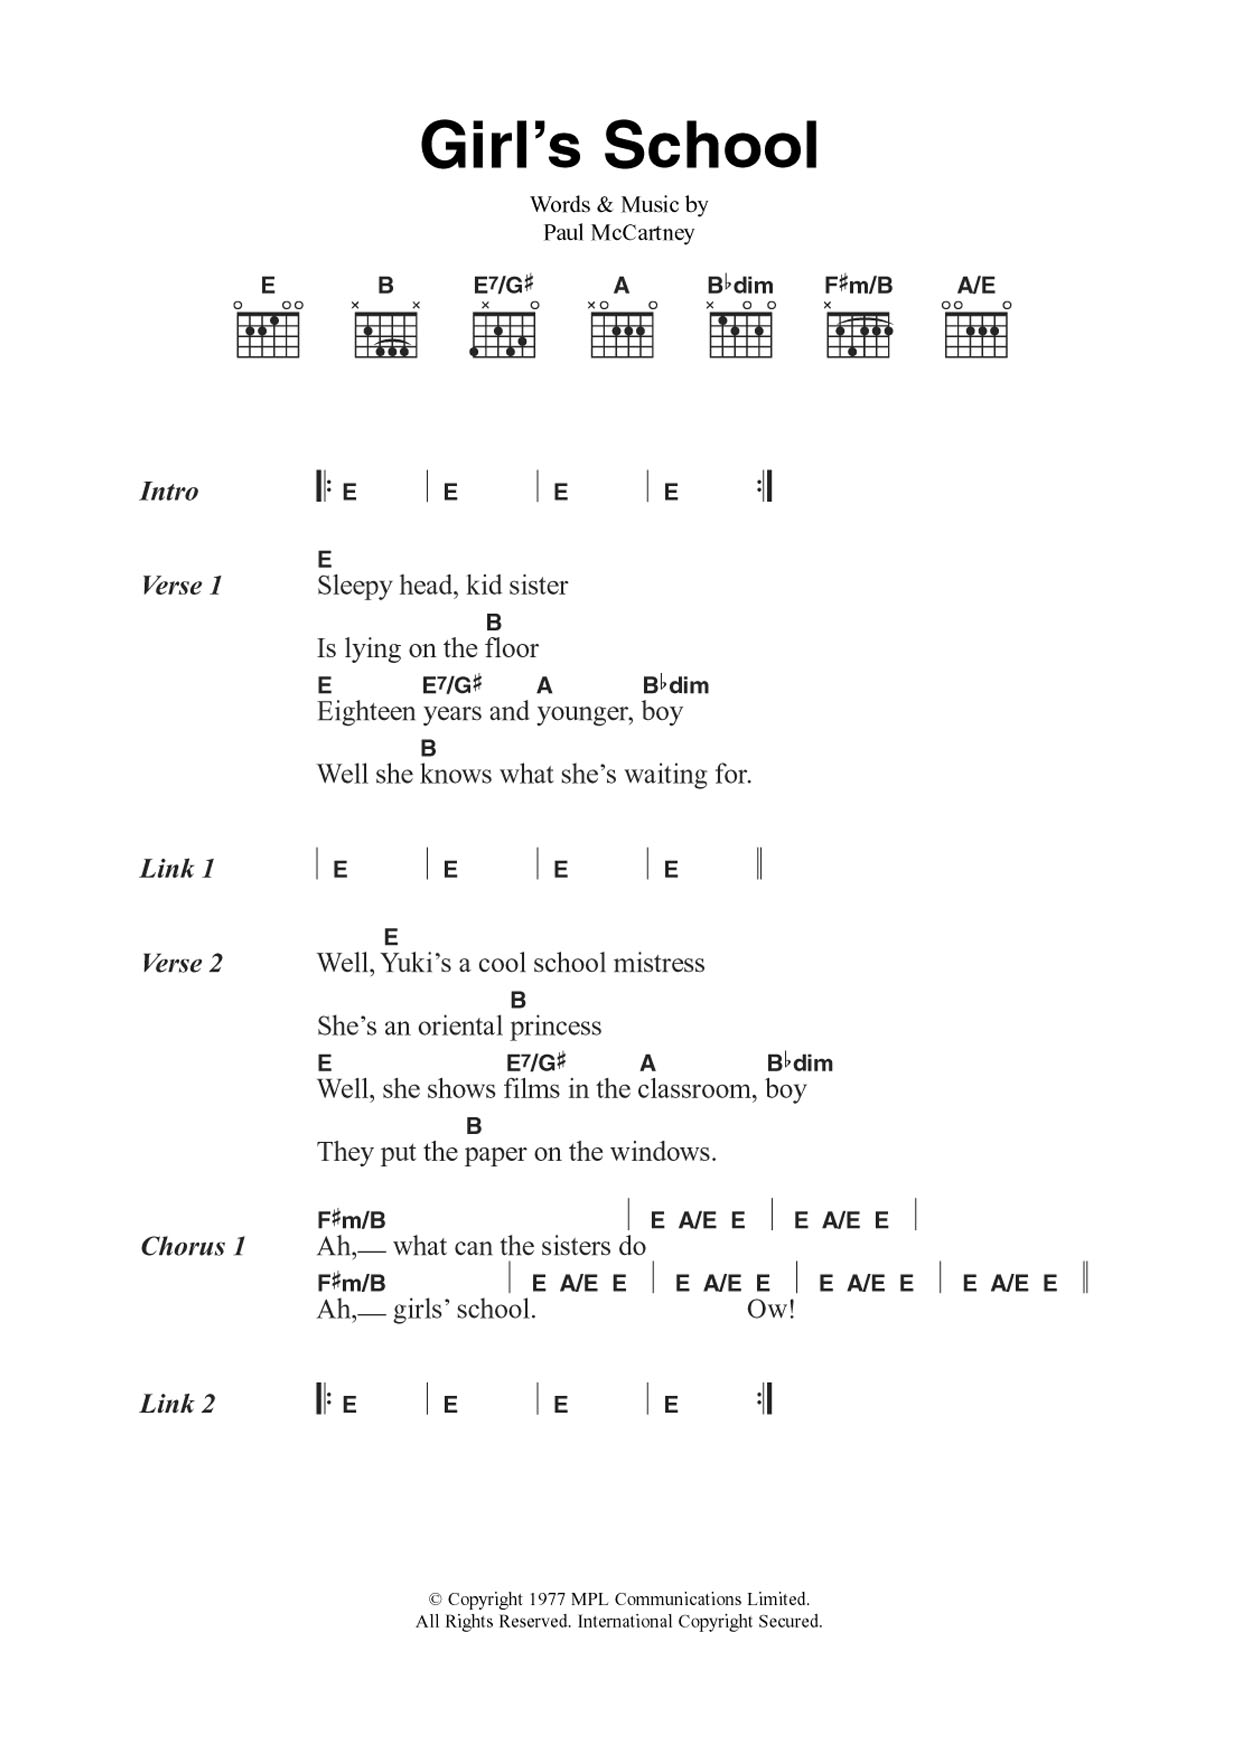 Wings Girls' School Sheet Music Notes & Chords for Guitar Chords/Lyrics - Download or Print PDF